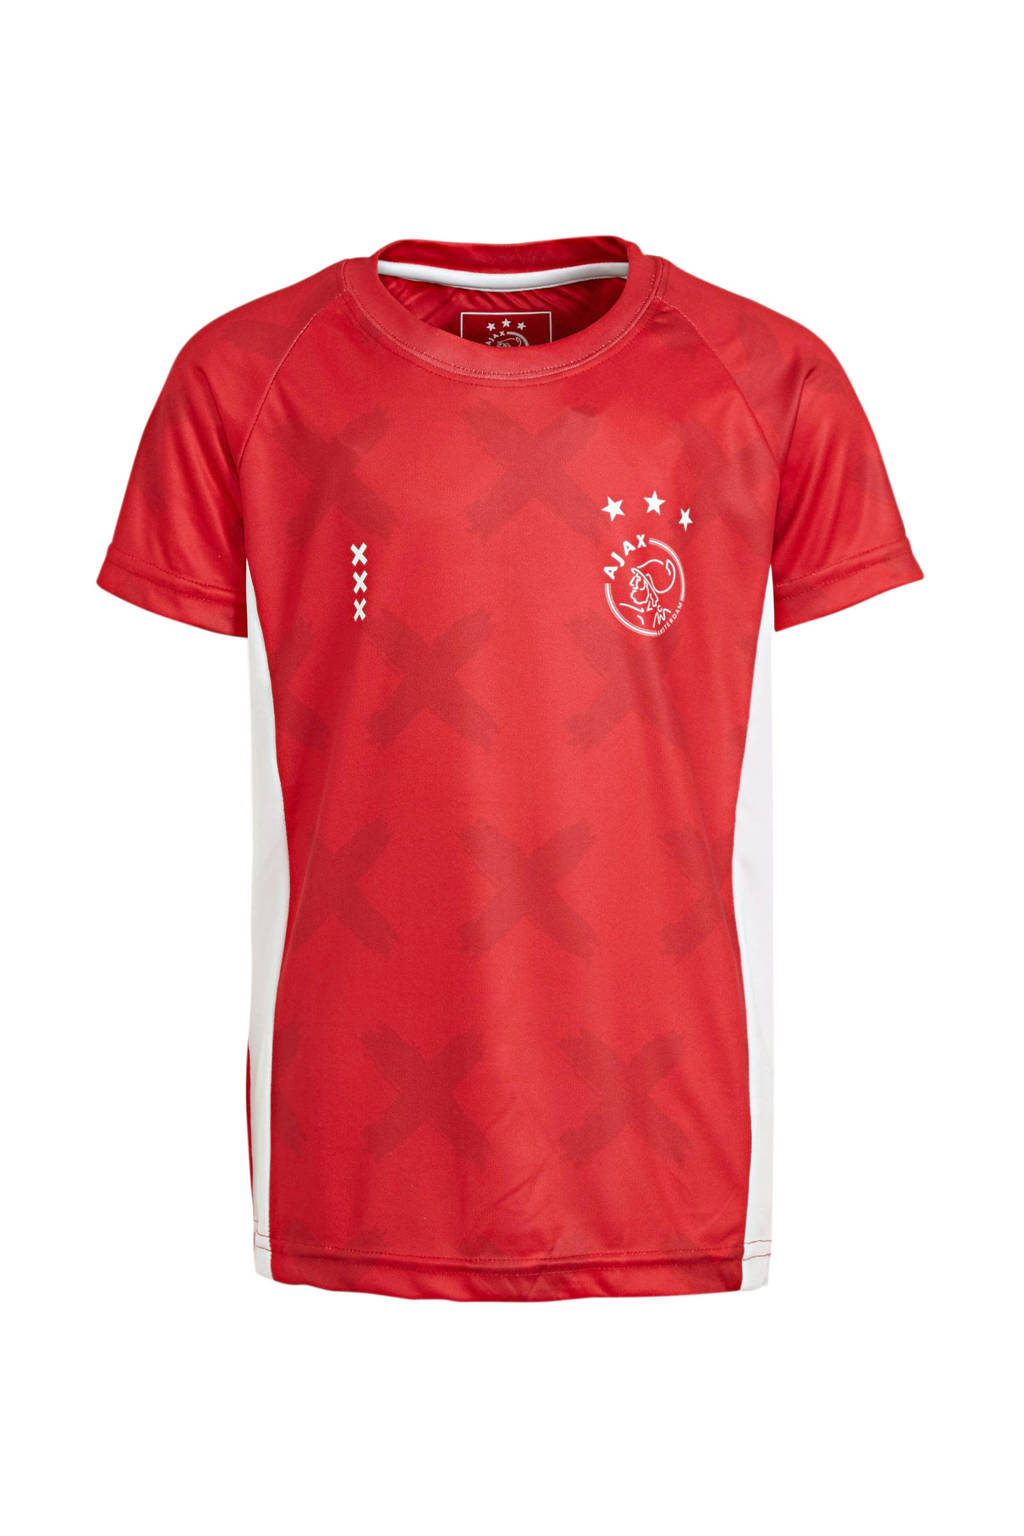 Ajax Ajax T-shirt met logo rood/wit